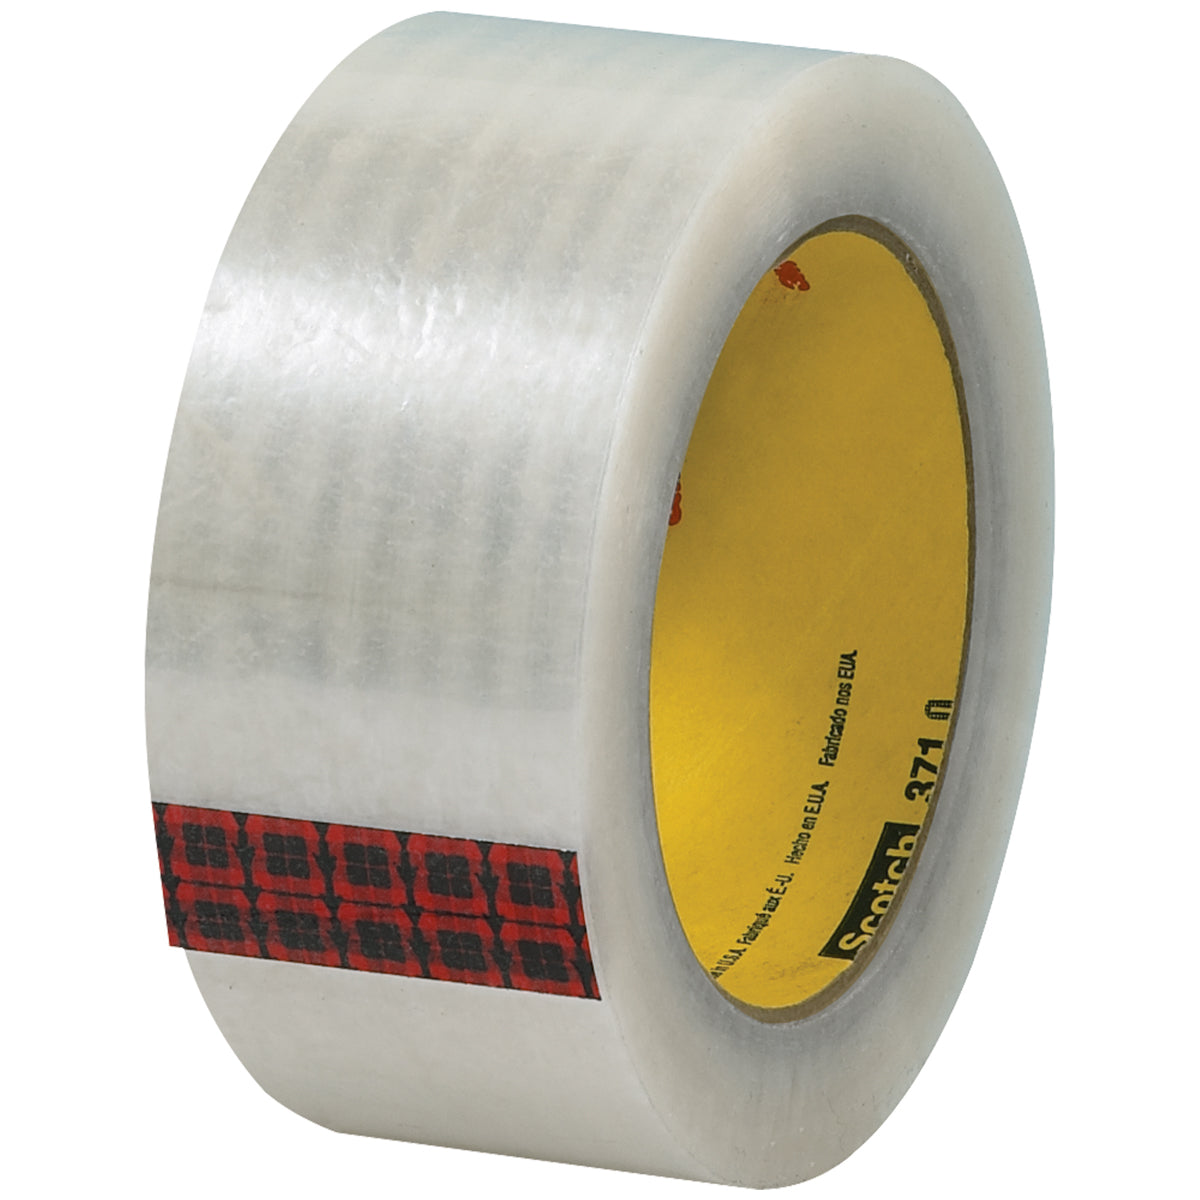 1.6 Mil - 2 x 110 Hotmelt Adhesive - Sealing Tape